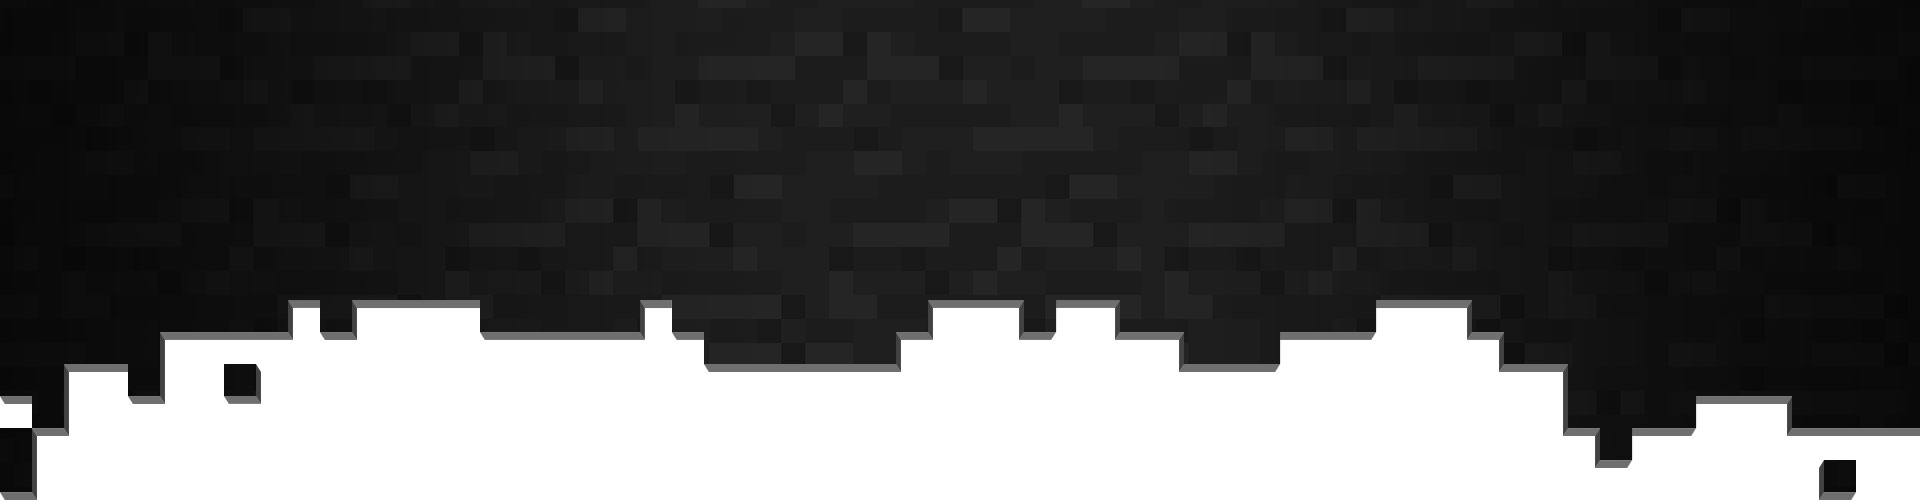 Pixel neri e grigi